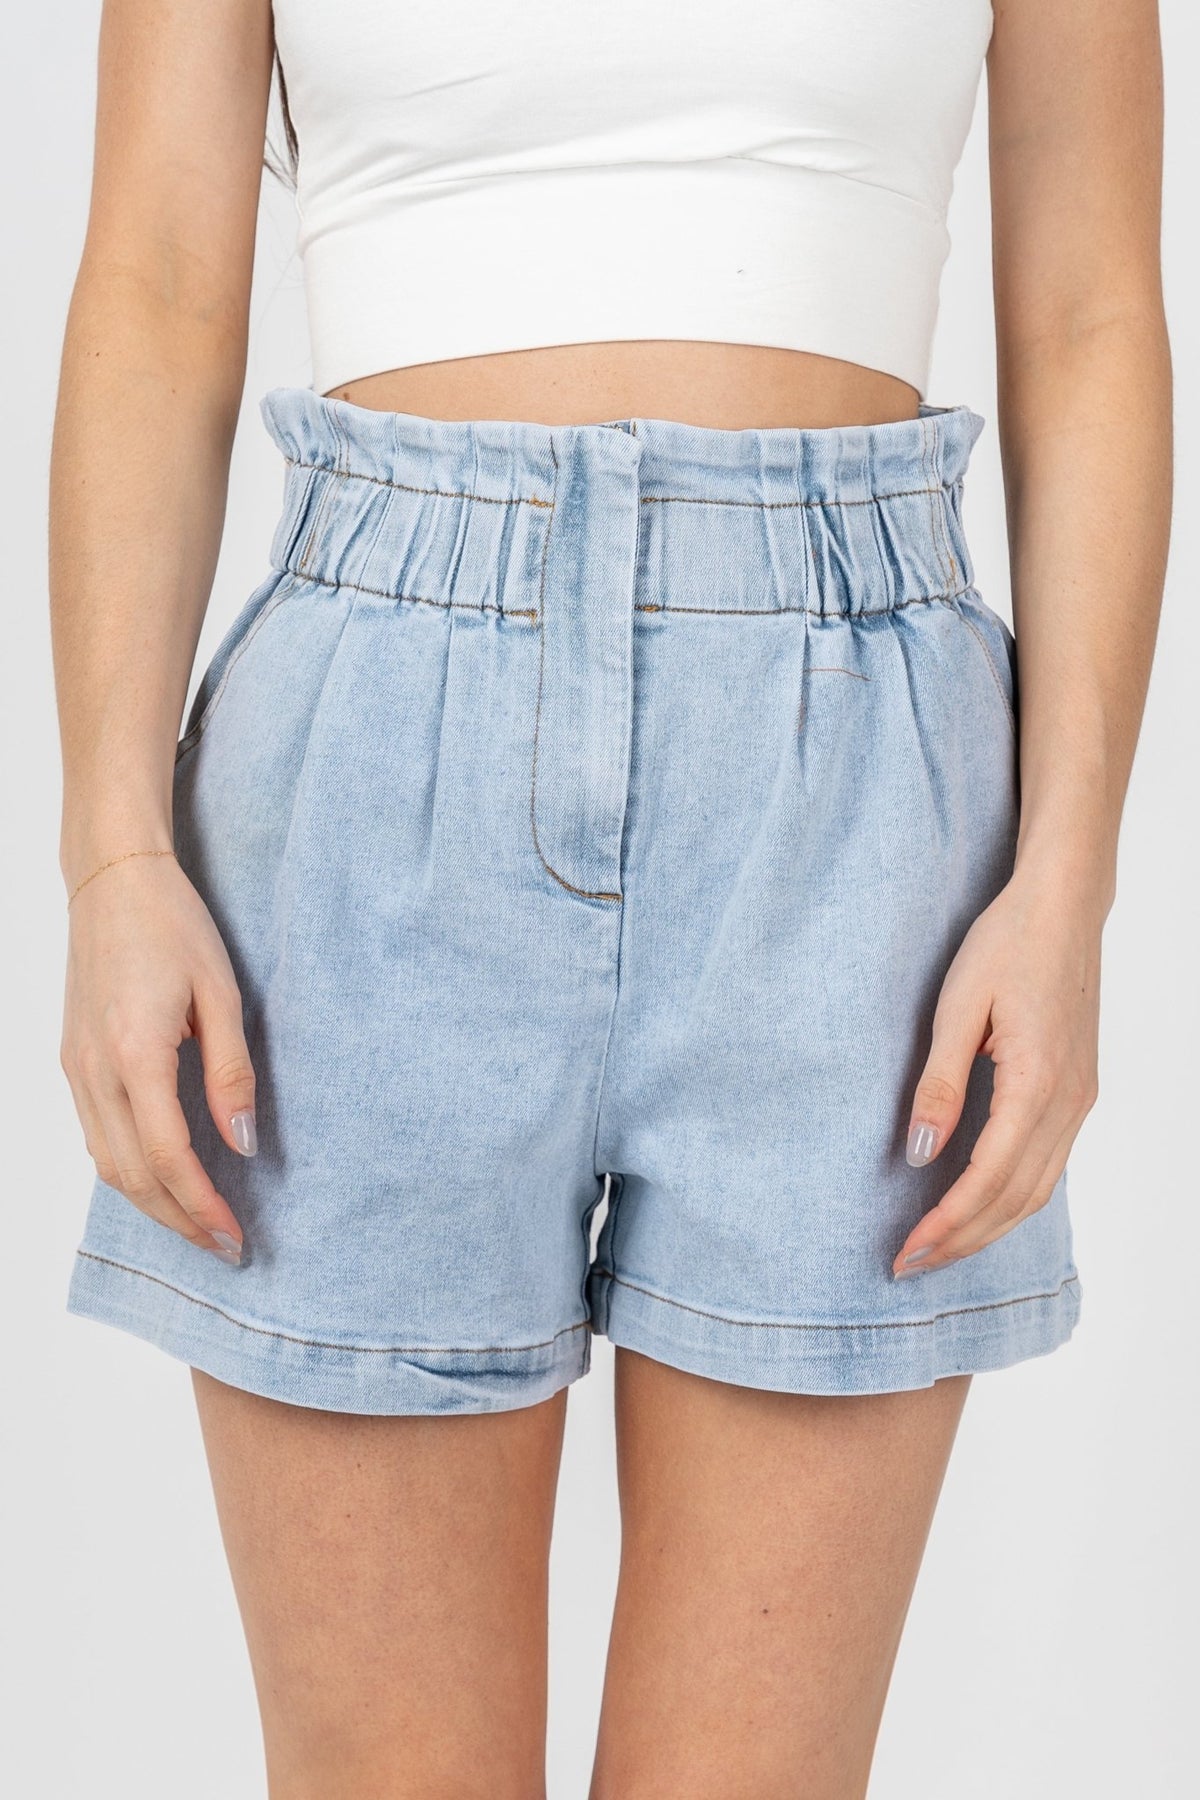 Paper bag waist shorts chambray - Cute Shorts - Trendy Shorts at Lush Fashion Lounge Boutique in Oklahoma City